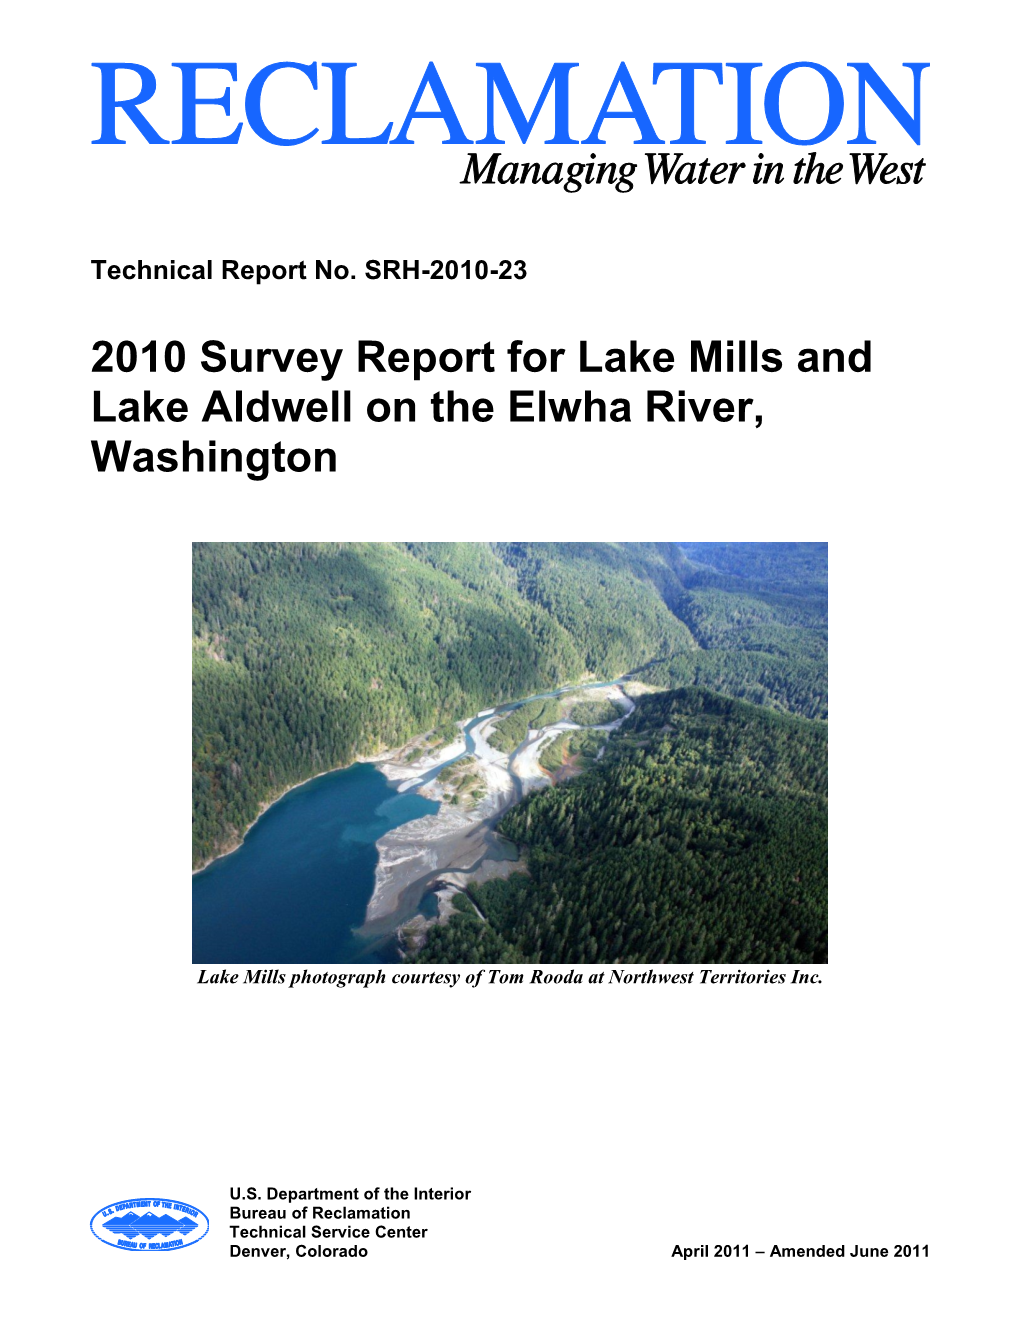 2010 Survey Report for Lake Mills and Lake Aldwell on the Elwha River, Washington